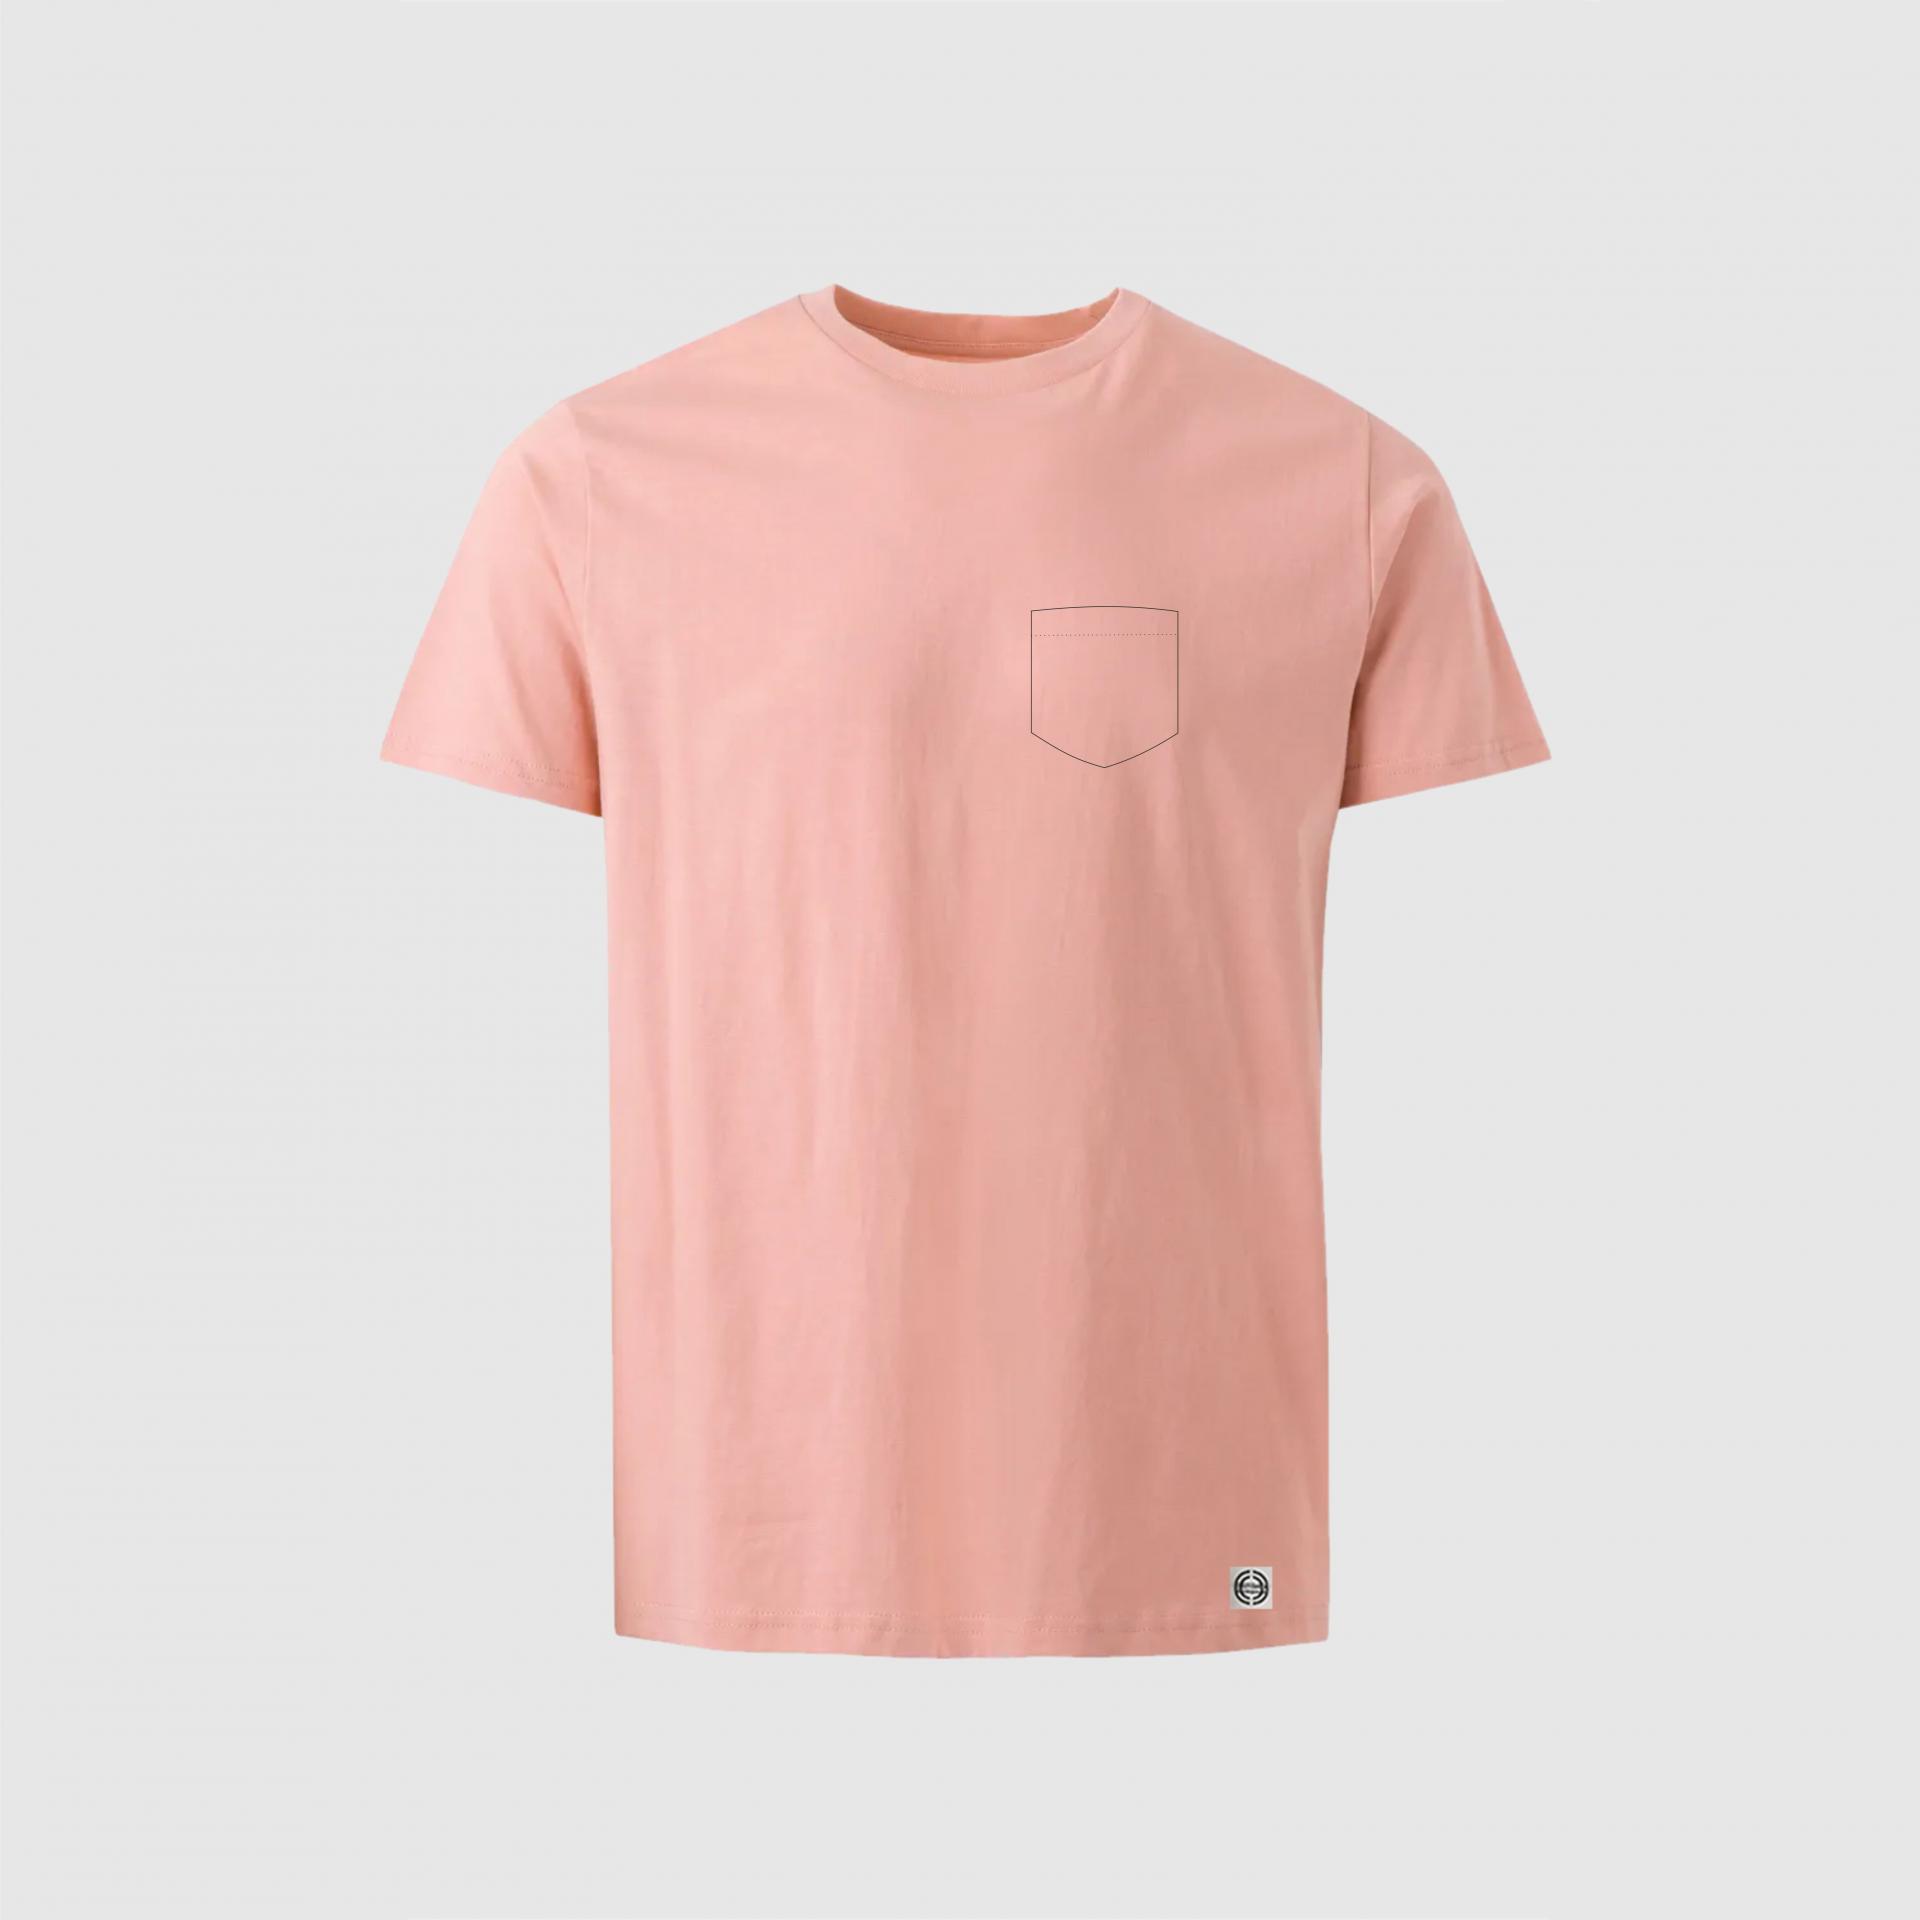 Camiseta unisex algodón orgánico bolsillo personalizado color rosa palo